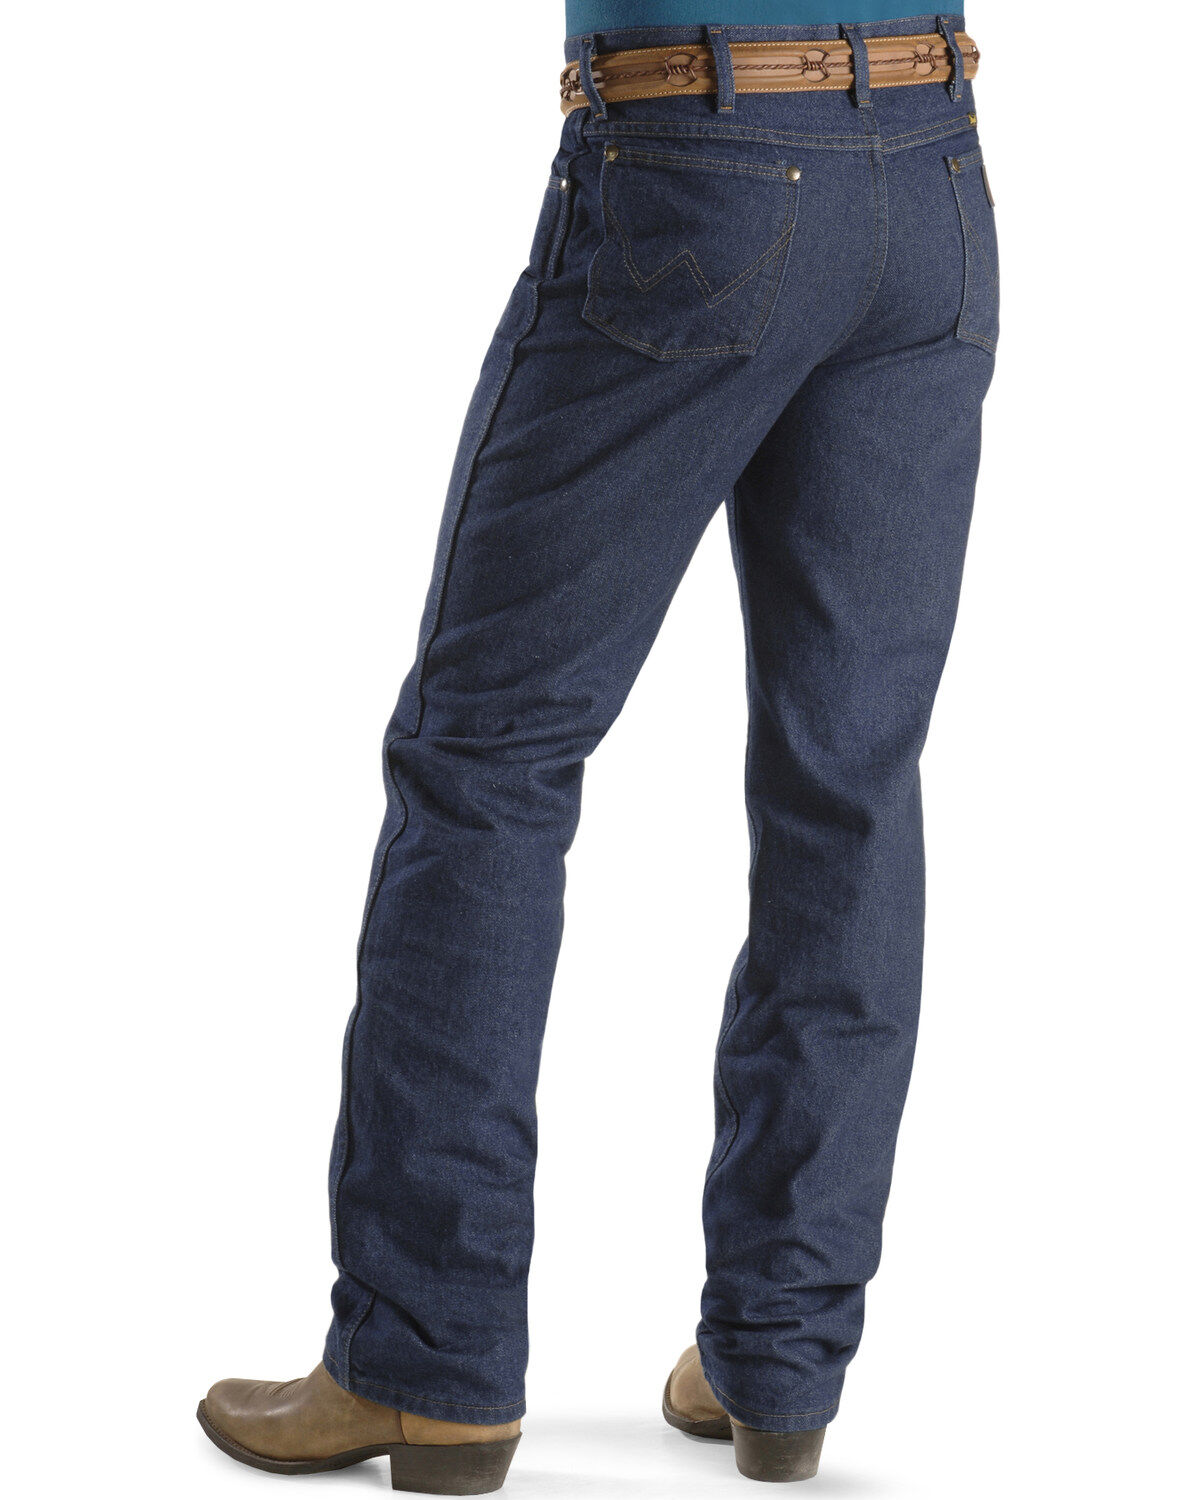 Wrangler Jeans - Cowboy Cut 36 MWZ Slim 